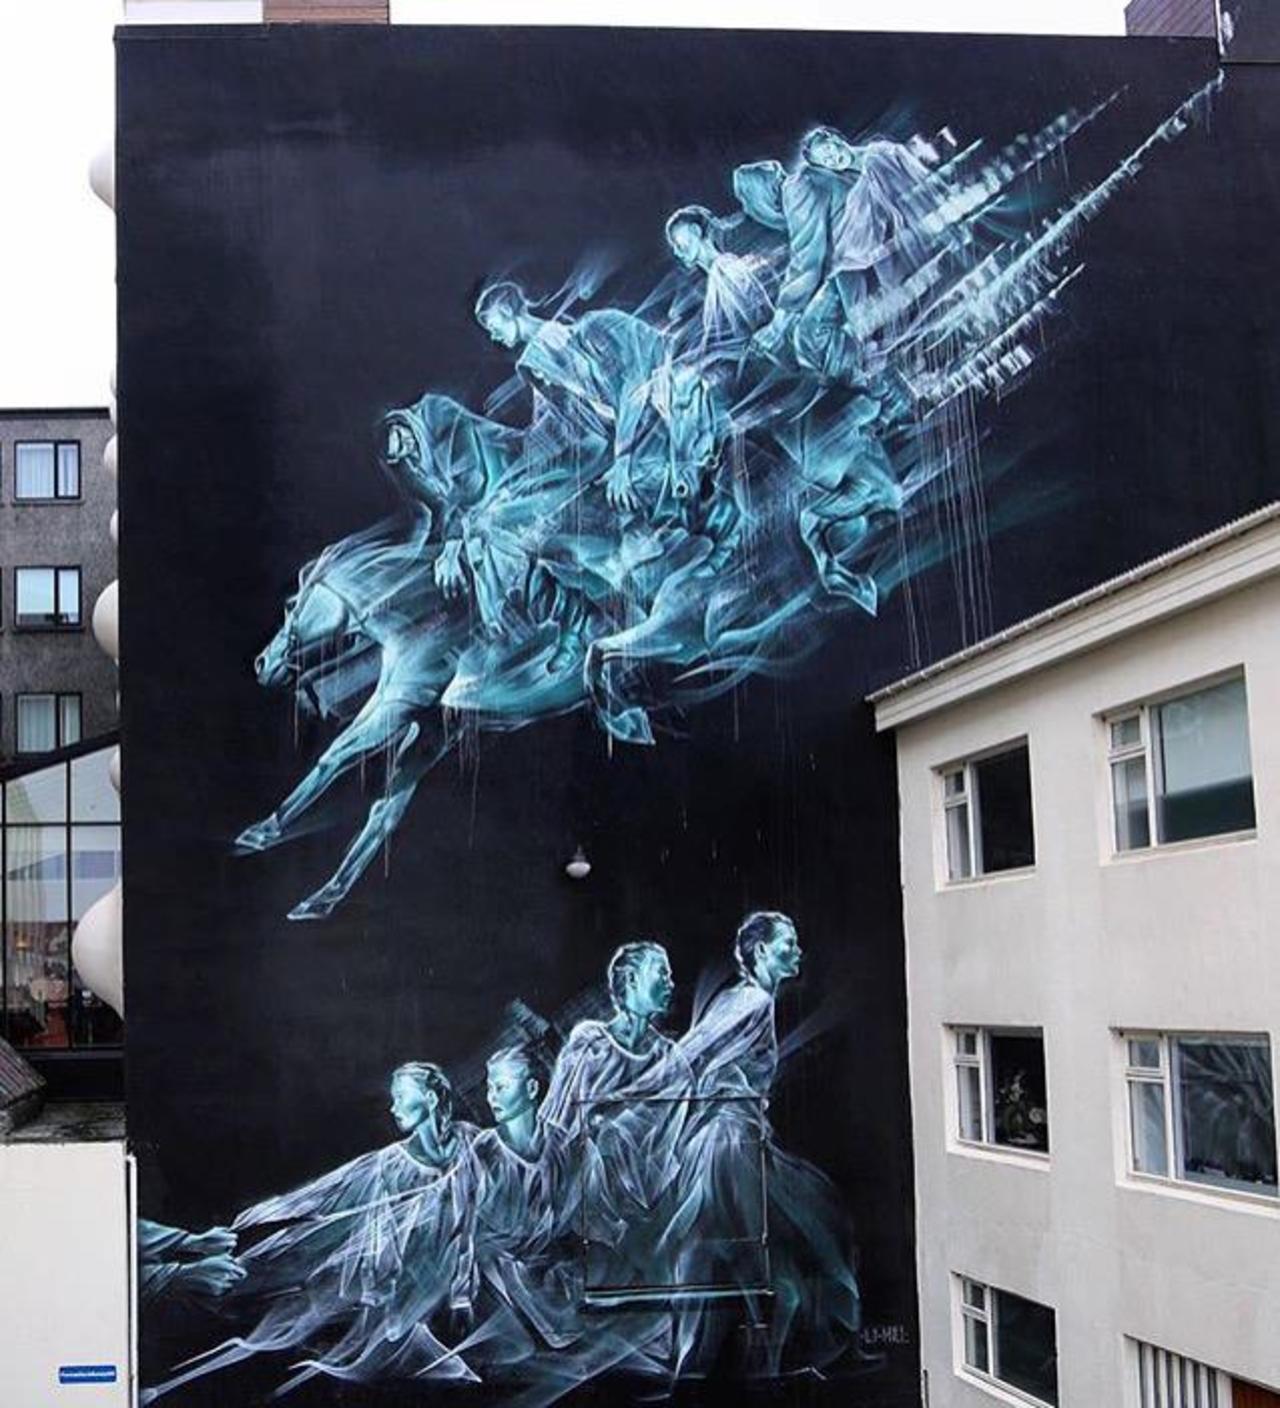 RT belilac "RT belilac "Street Art by li hill in Reykjavik 

#art #graffiti #mural #streetart http://t.co/XXVVvWEt3F""